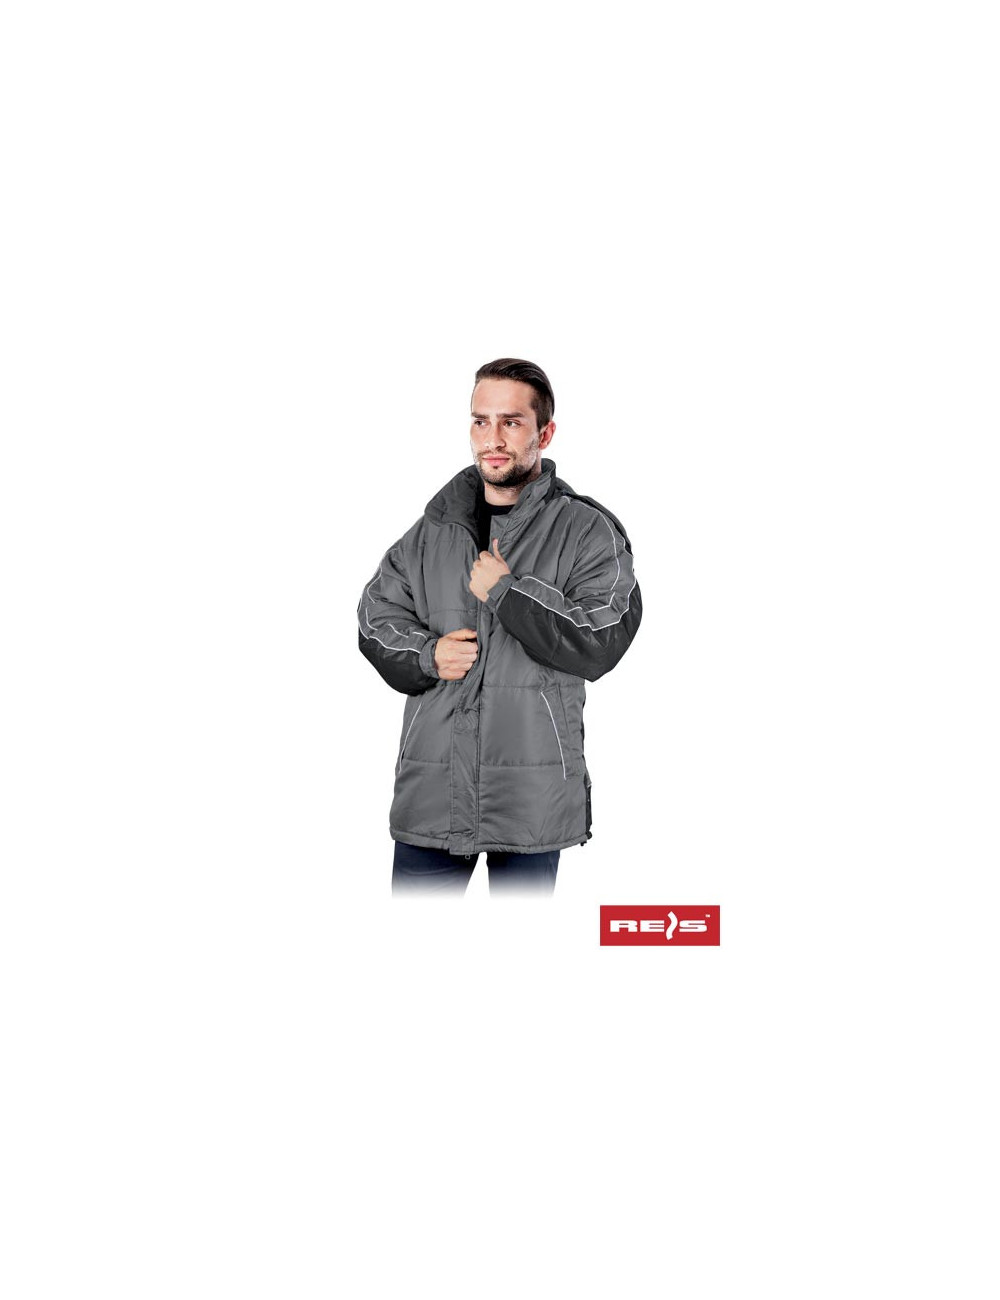 Protective jacket insulated coala sb grey-black Reis